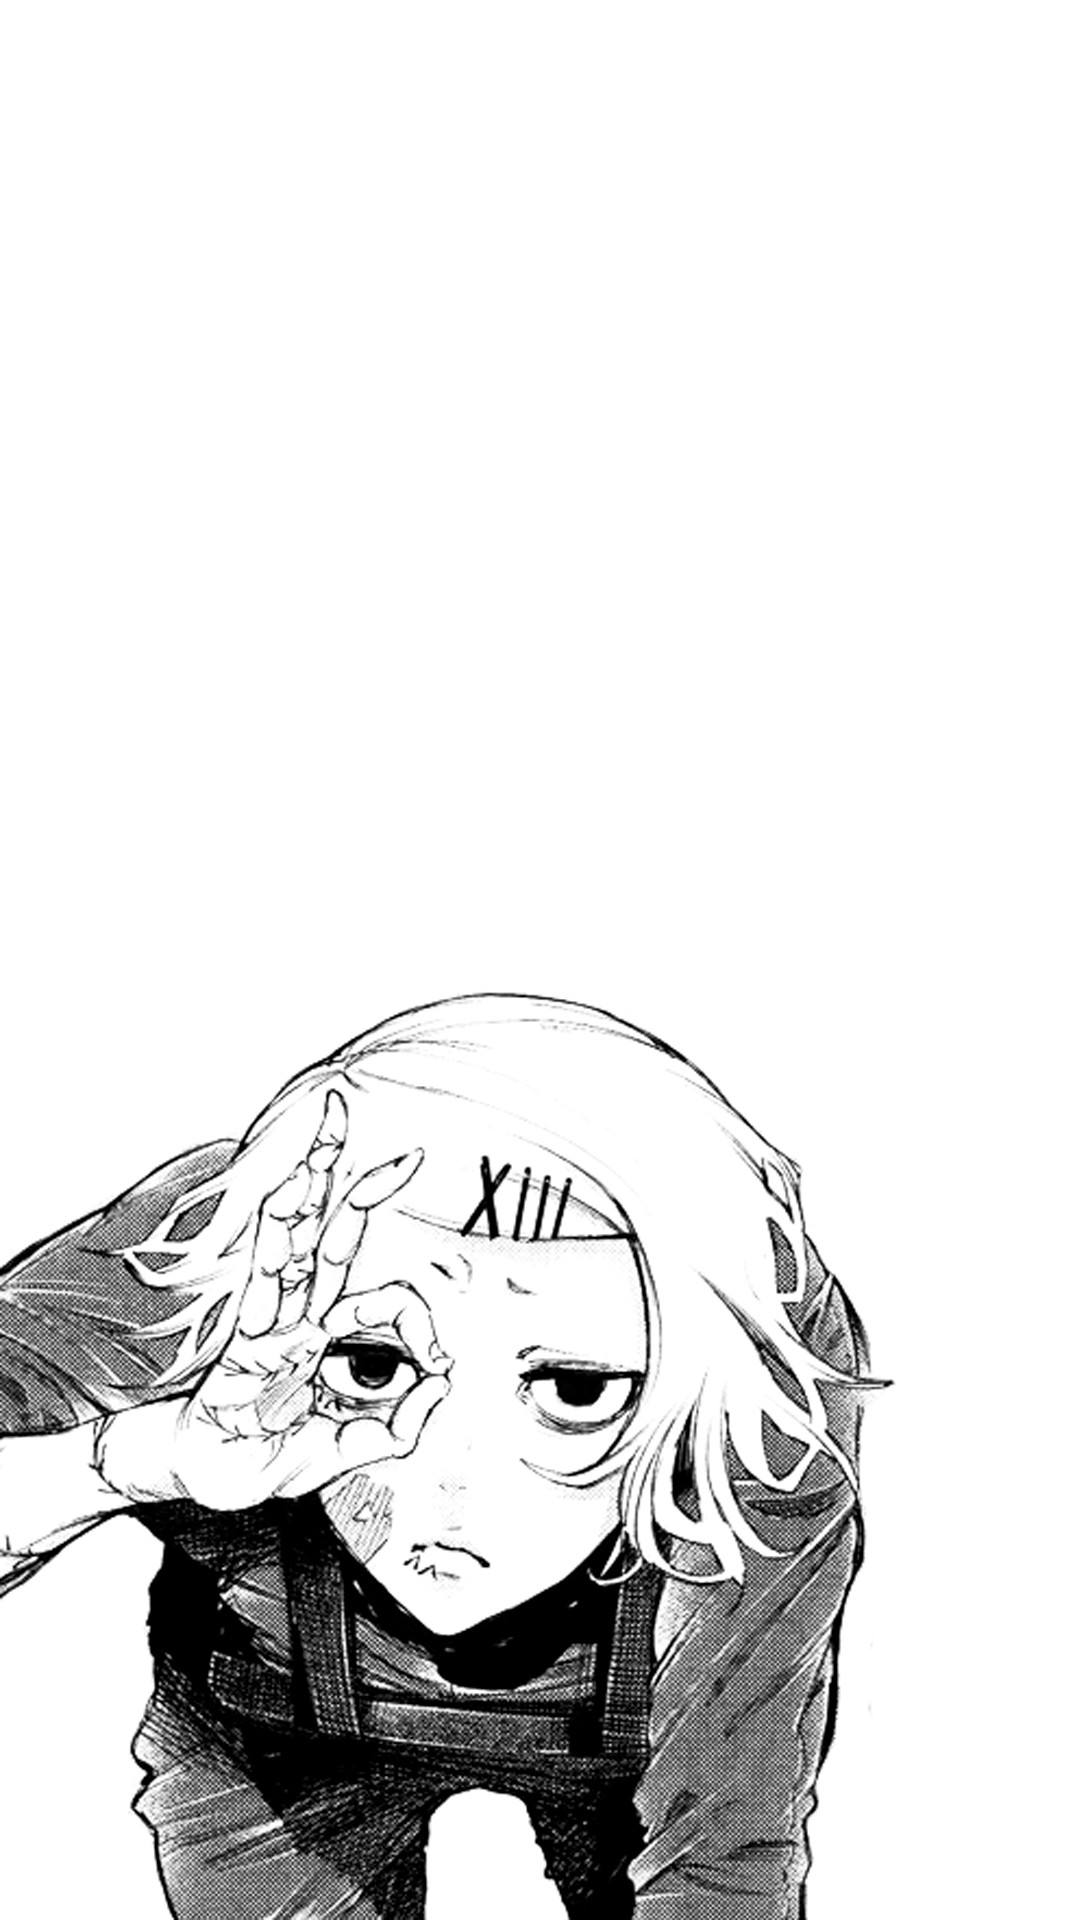 1080x1920 Bildresultat fÃ¶r tokyo ghoul wallpaper manga